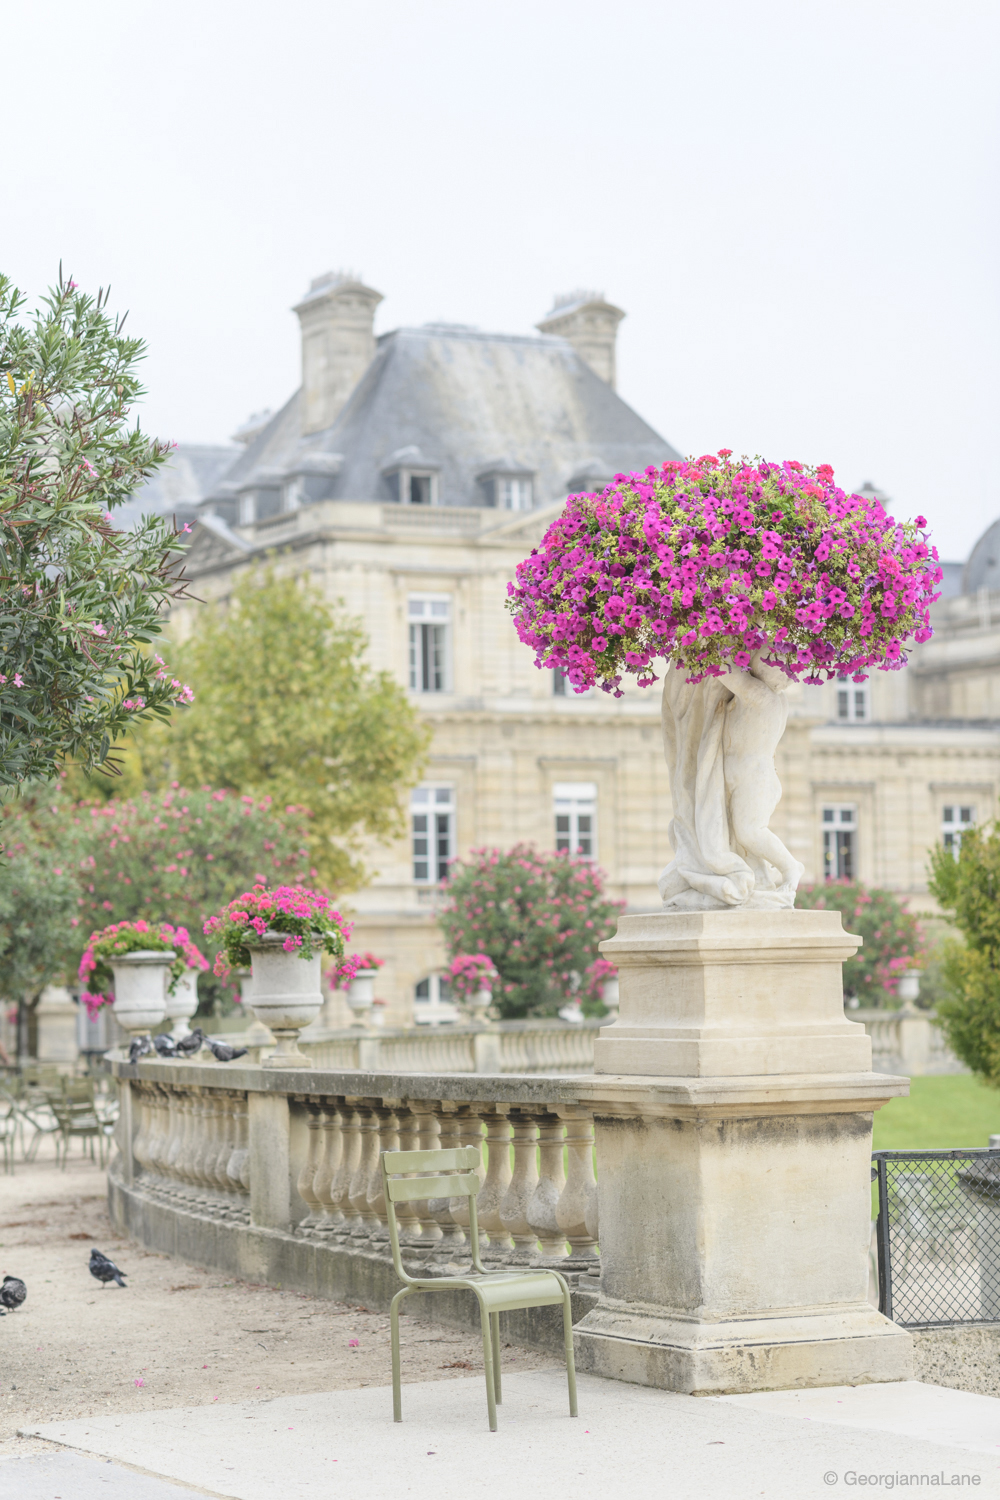 Luxembourg Garden, Paris, by Georgianna Lane